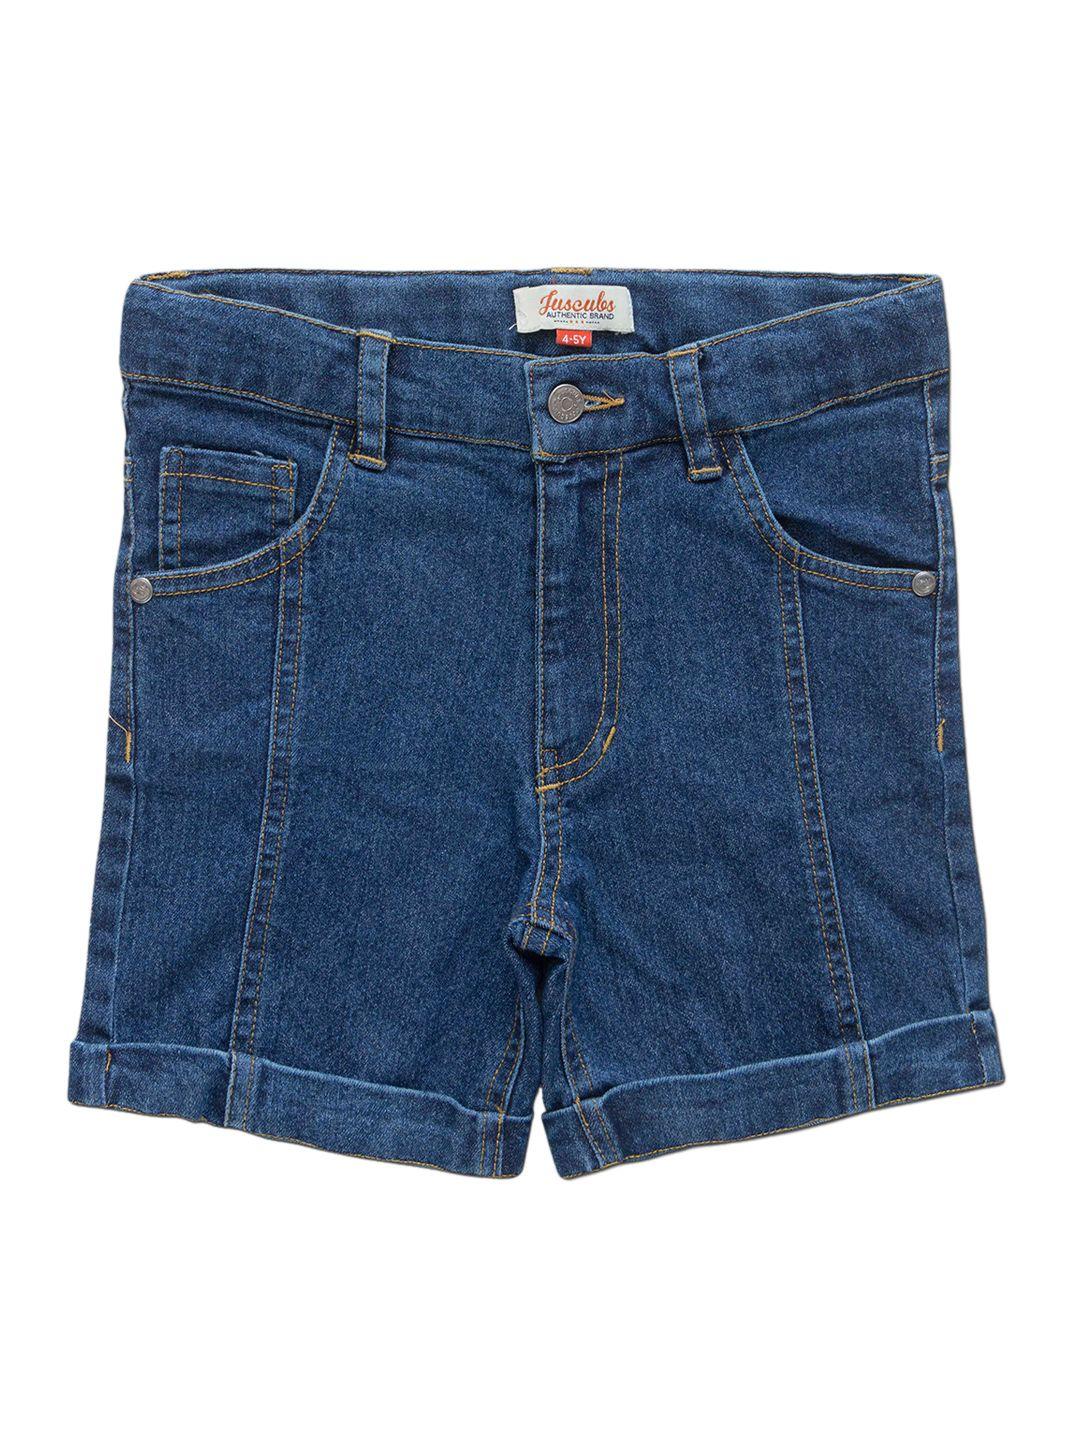 juscubs-boys-blue-denim-outdoor-denim-shorts